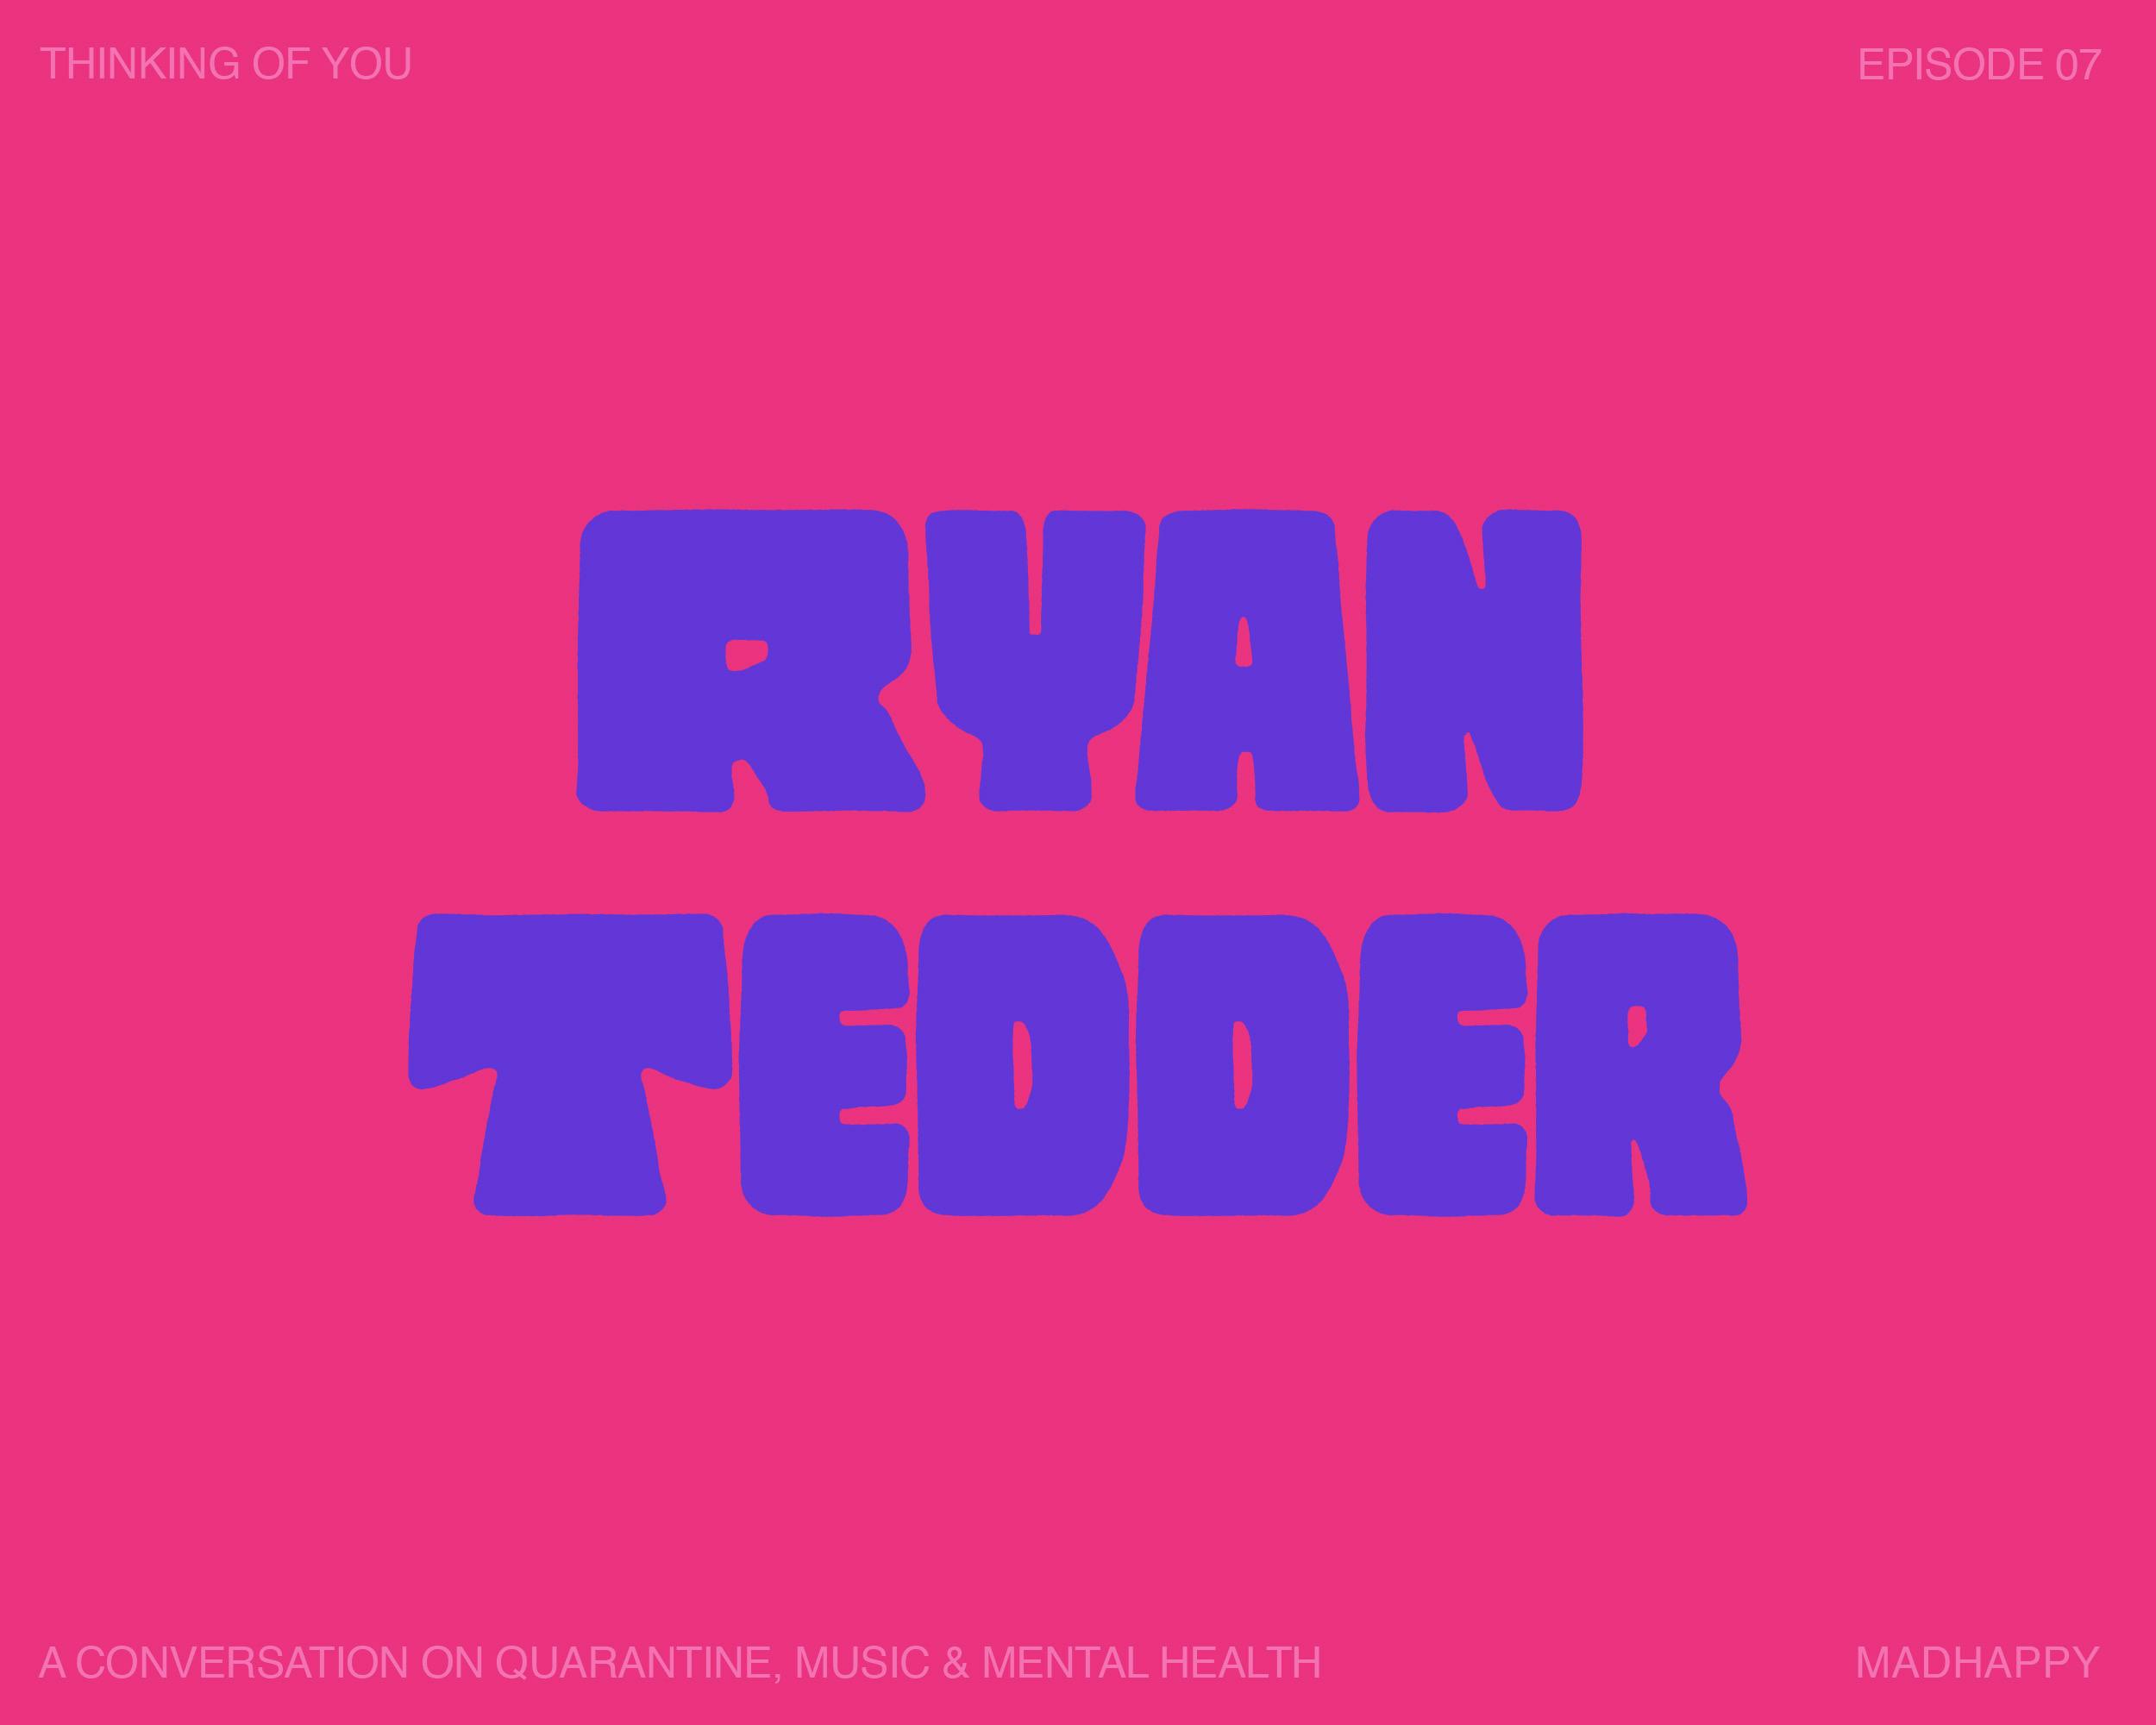 Ryan Tedder